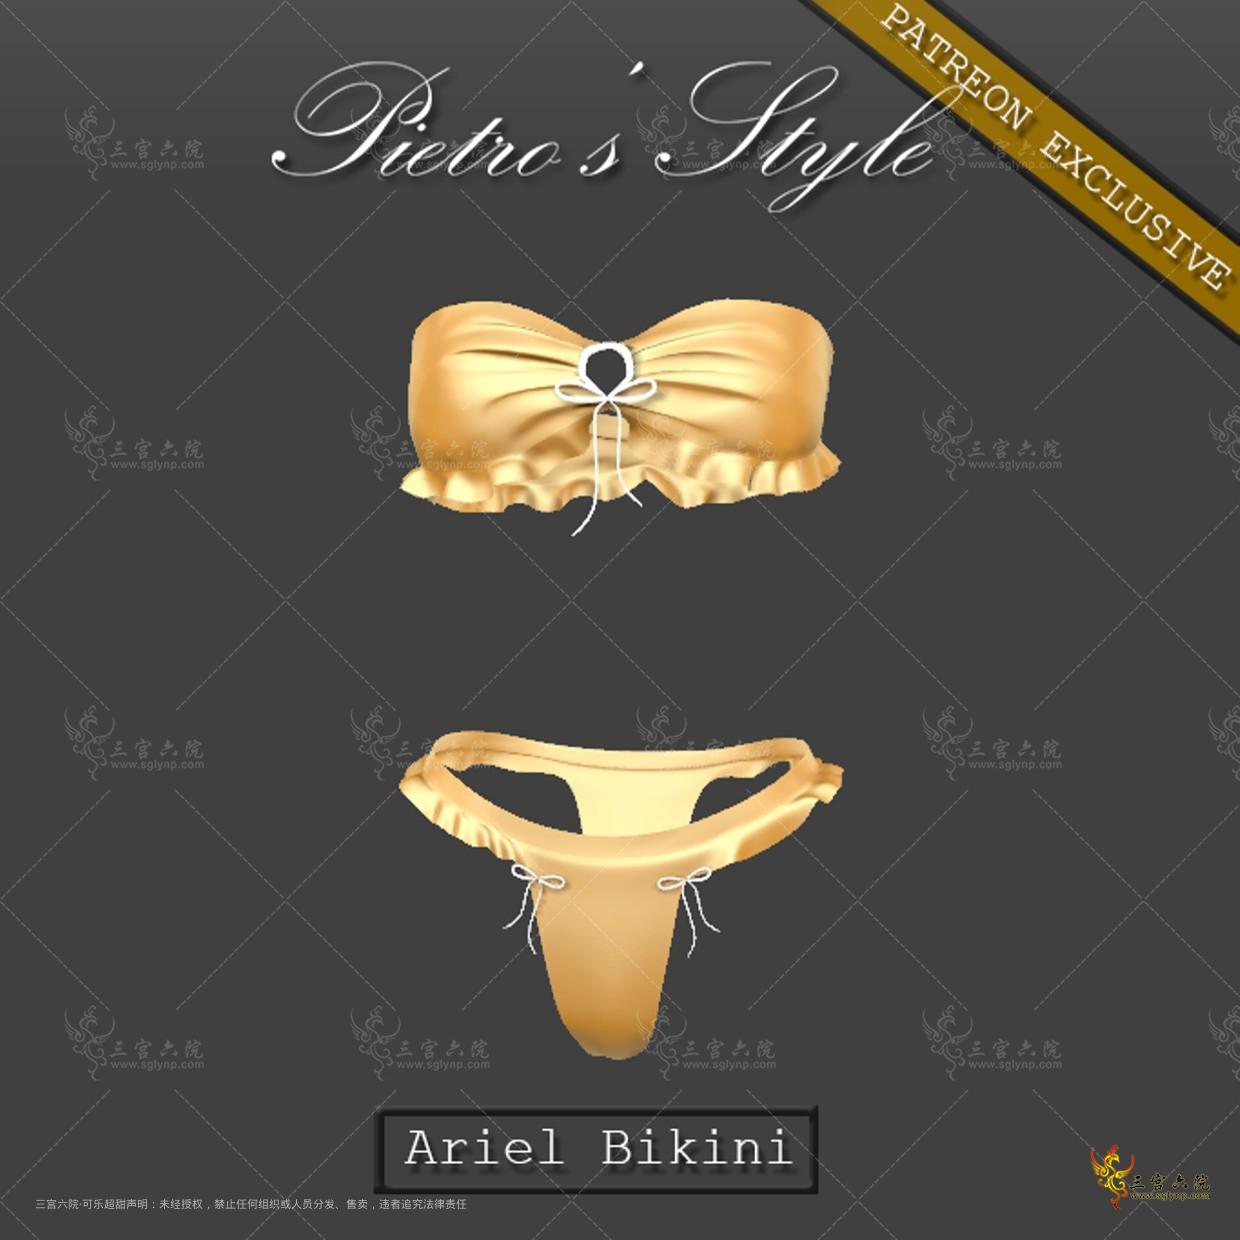 (Pietro's Style) - Ariel Bikini.png